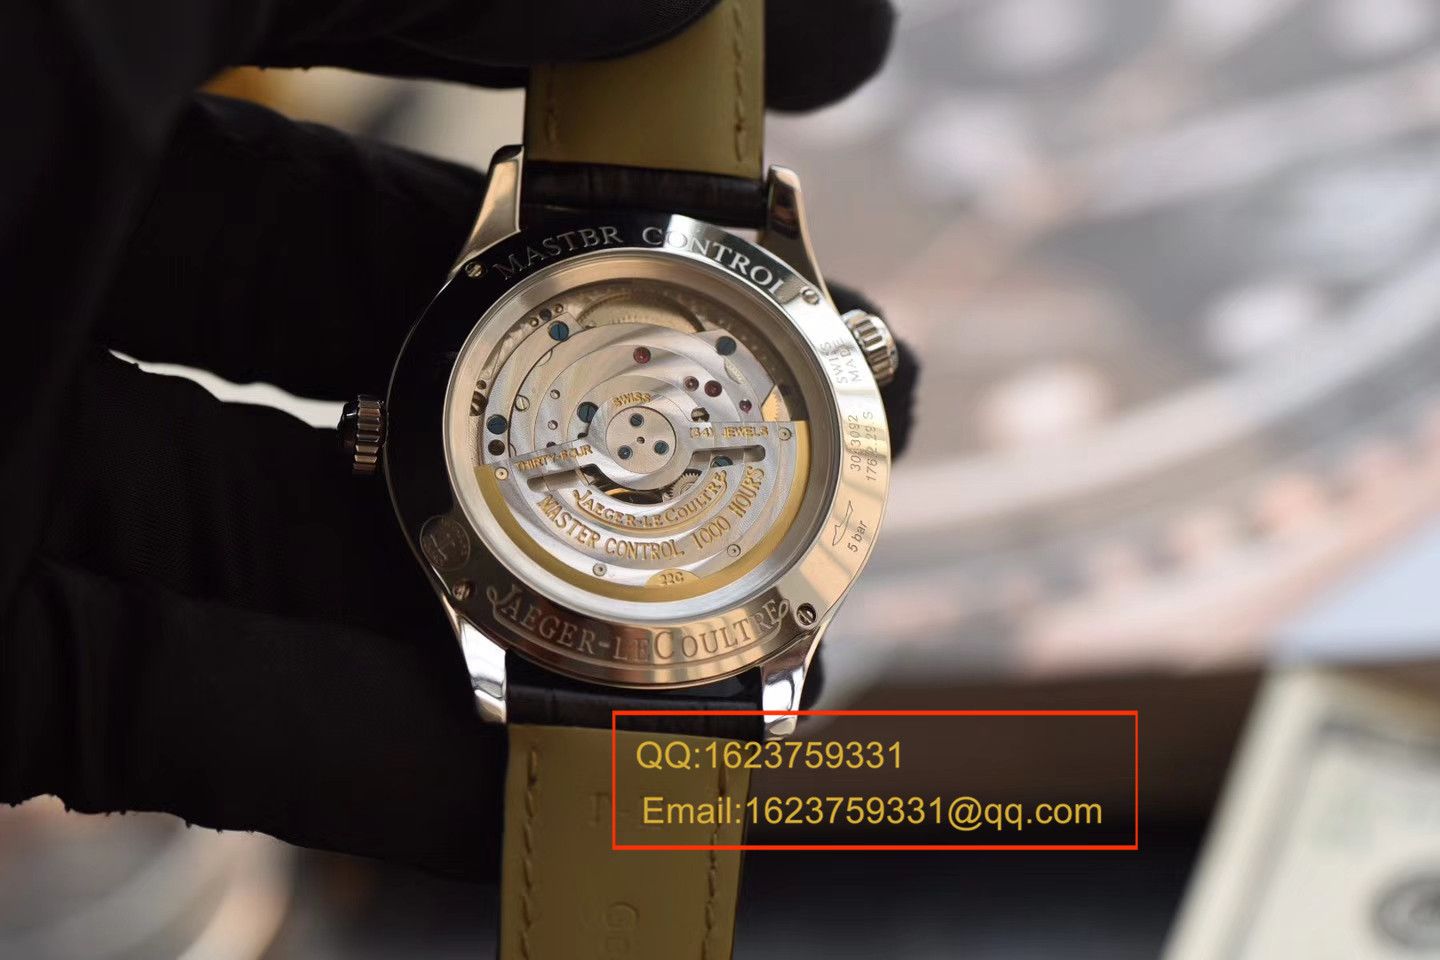 【TW一比一超A高仿手表】积家大师 MASTER CONTROL系列q1428420双时区腕表 / JJBE029B